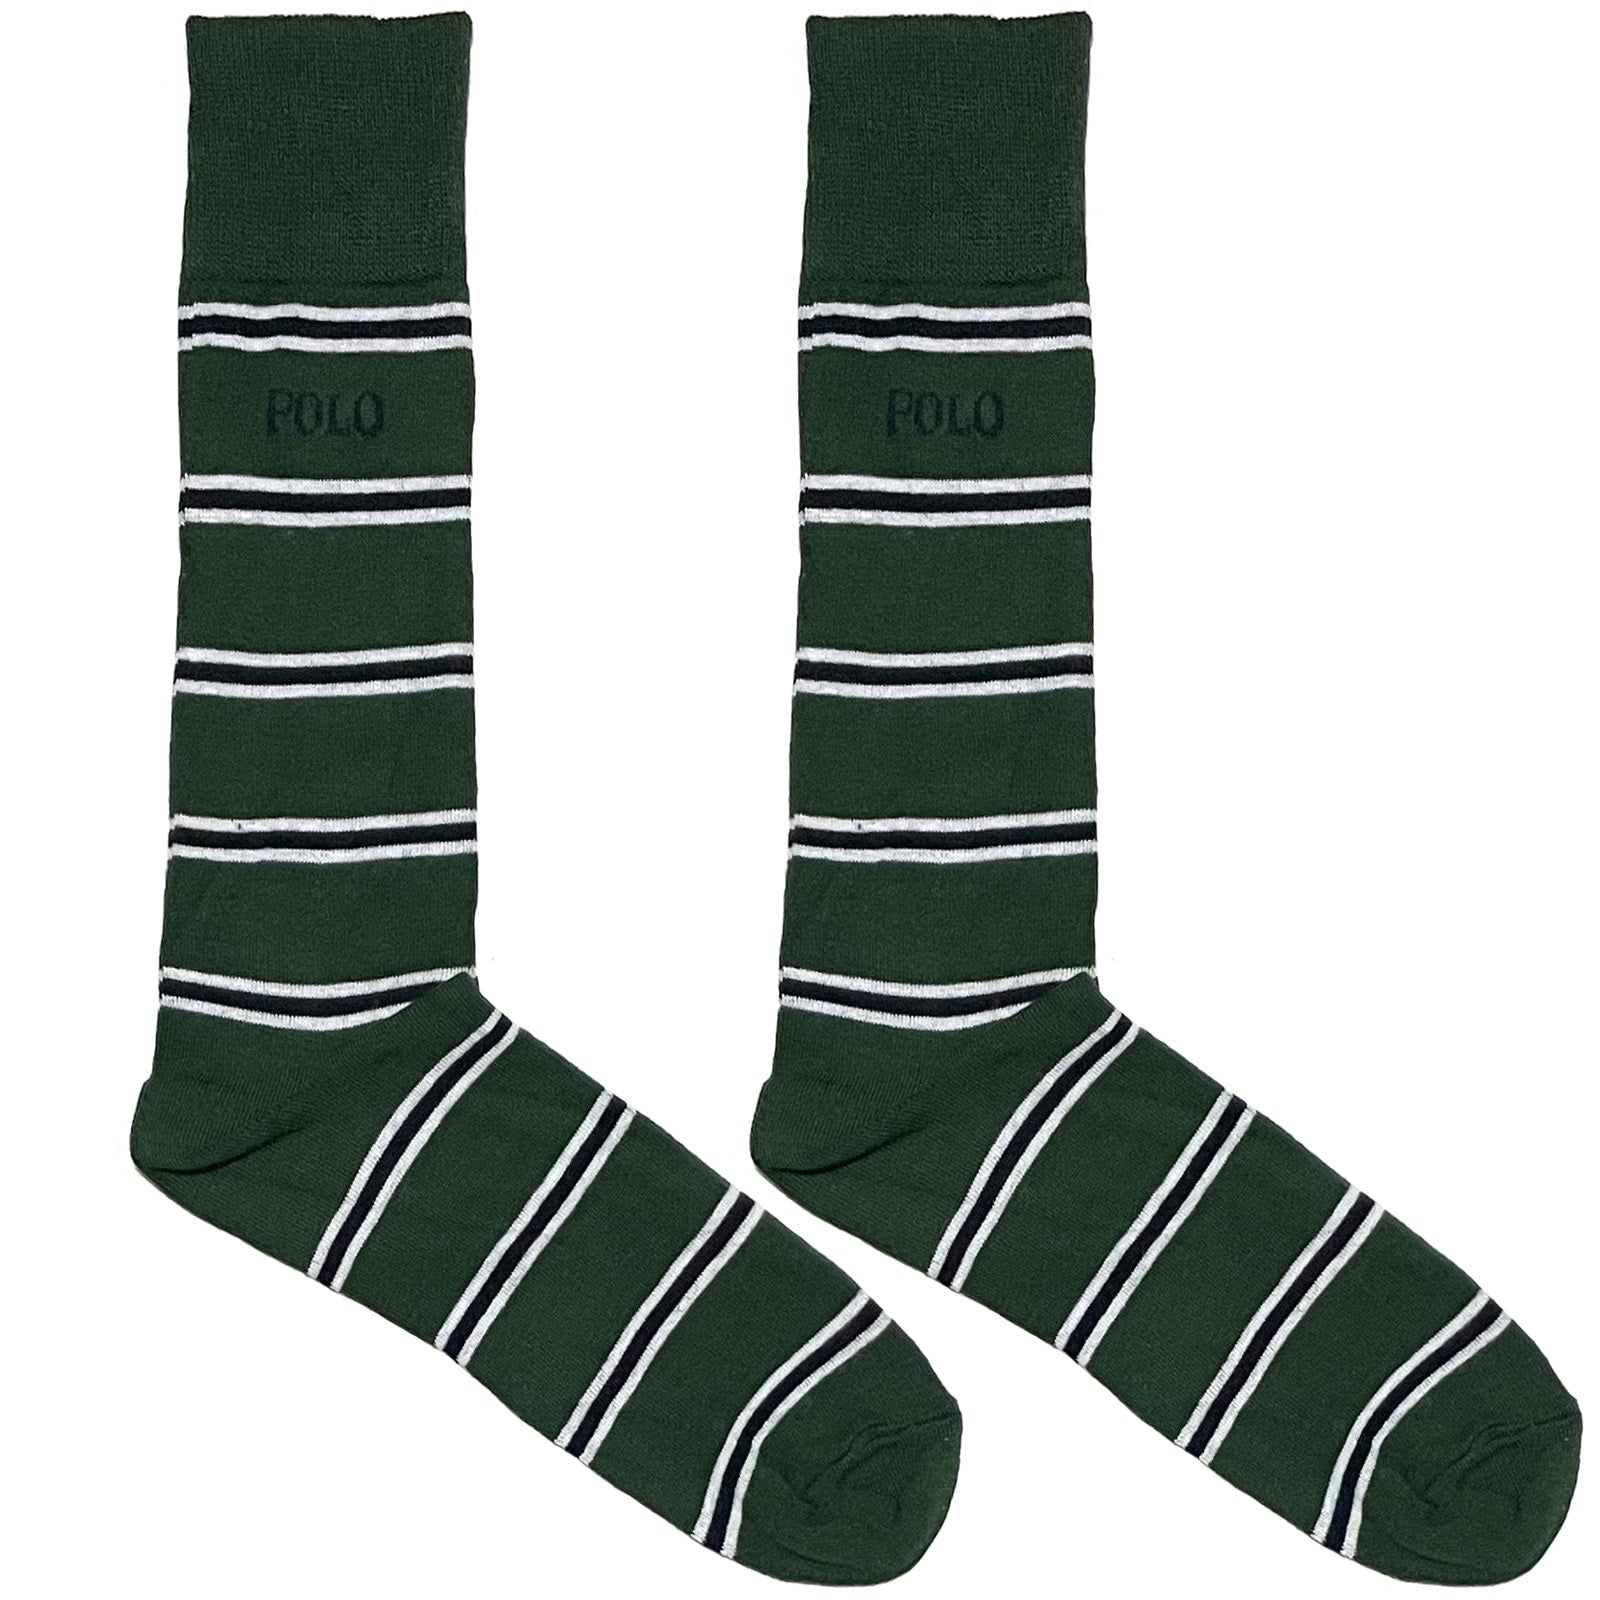 Polo Green And White Stripe Socks